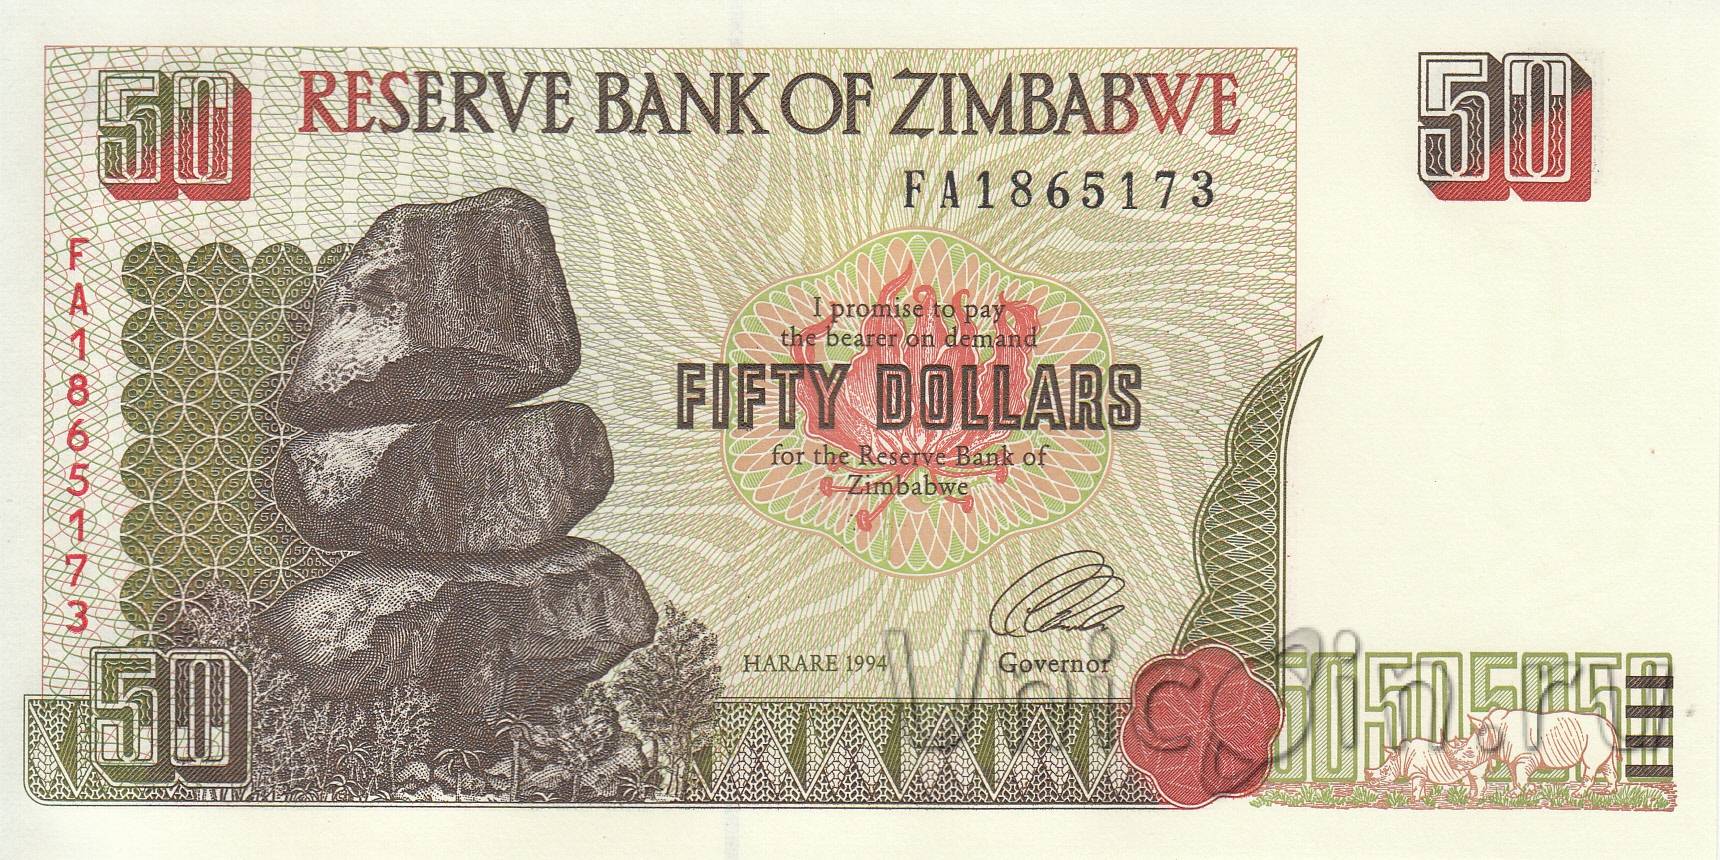 1994 долларов в рублях. Купюры Зимбабве. Валюта Зимбабве. Зимбабве 50 долларов 1994. 50 Долларов купюра.